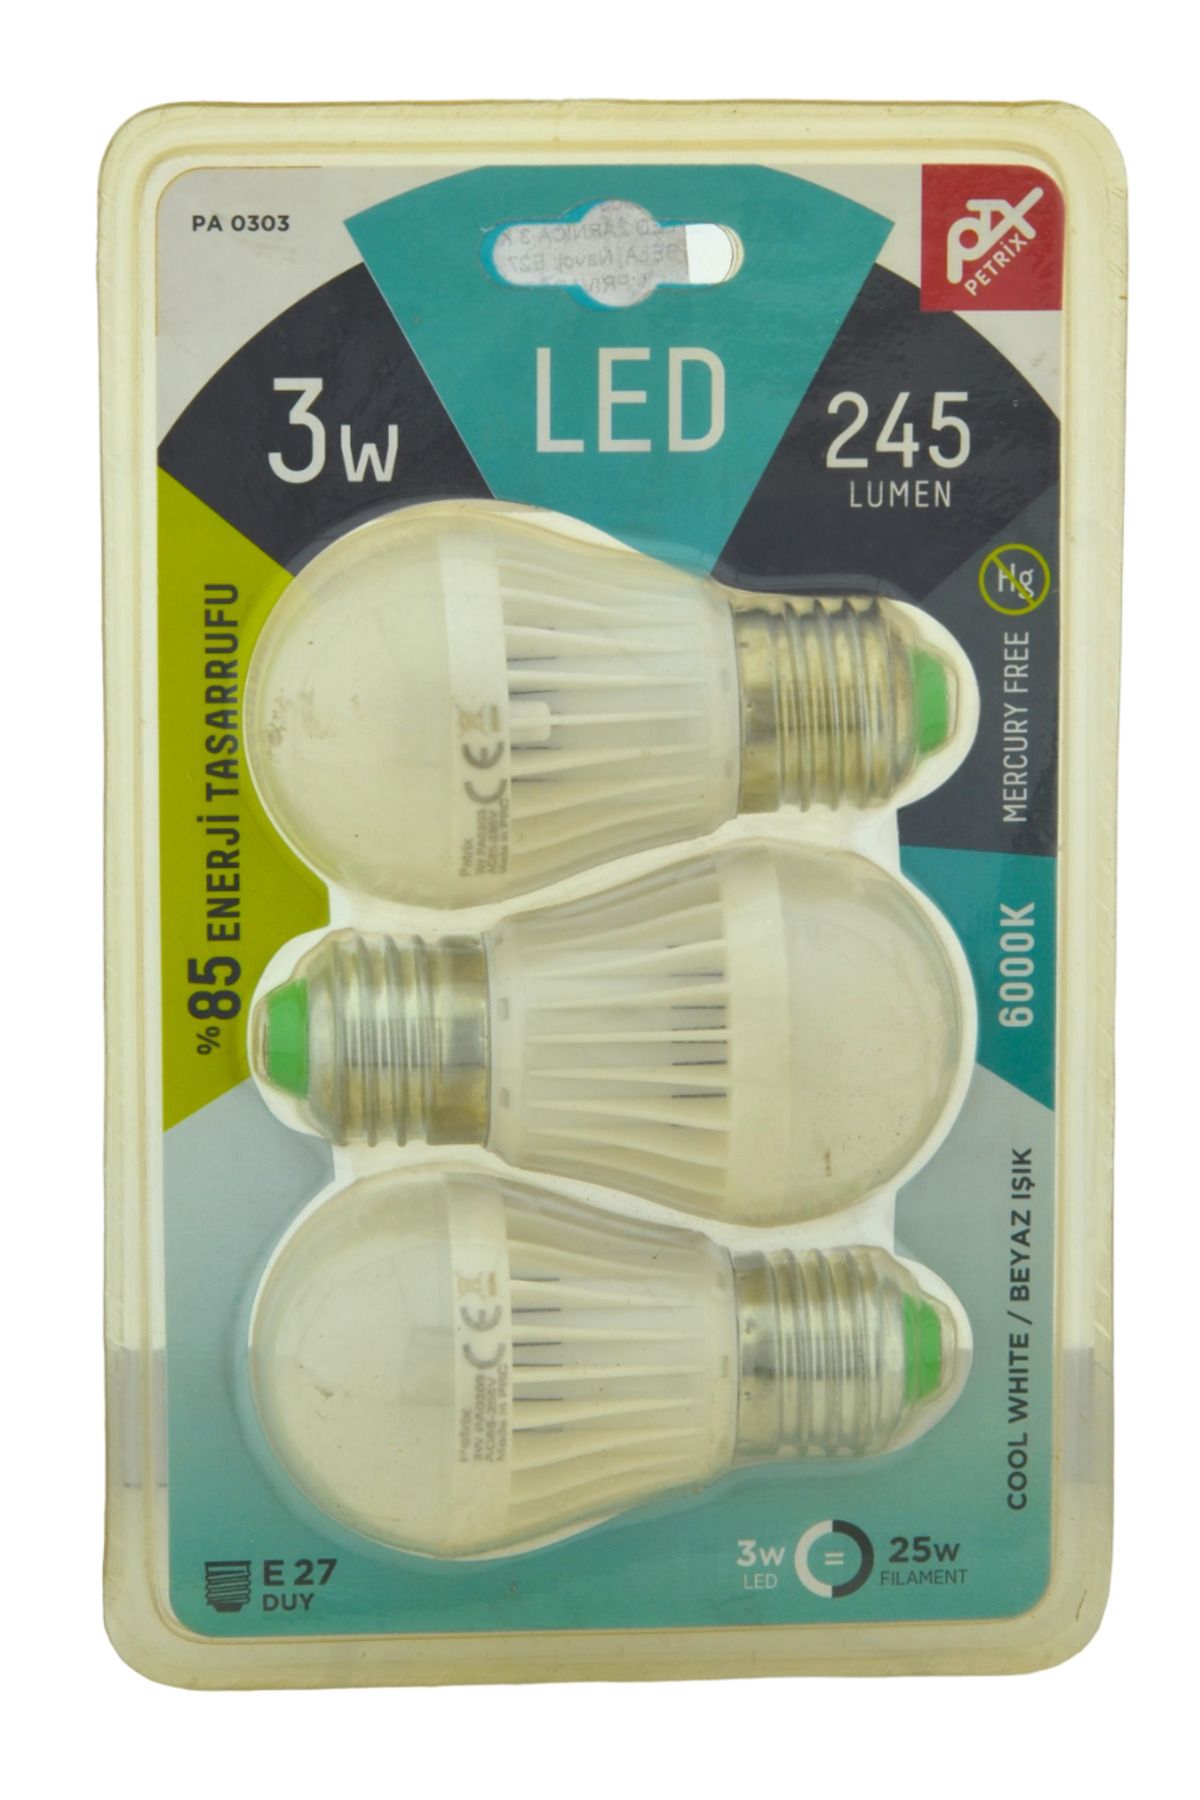 Petrix 3 Adet 3W 245 Lumen %85 Enerji Tasarruflu E27 Duy Beyaz Işık Ampul